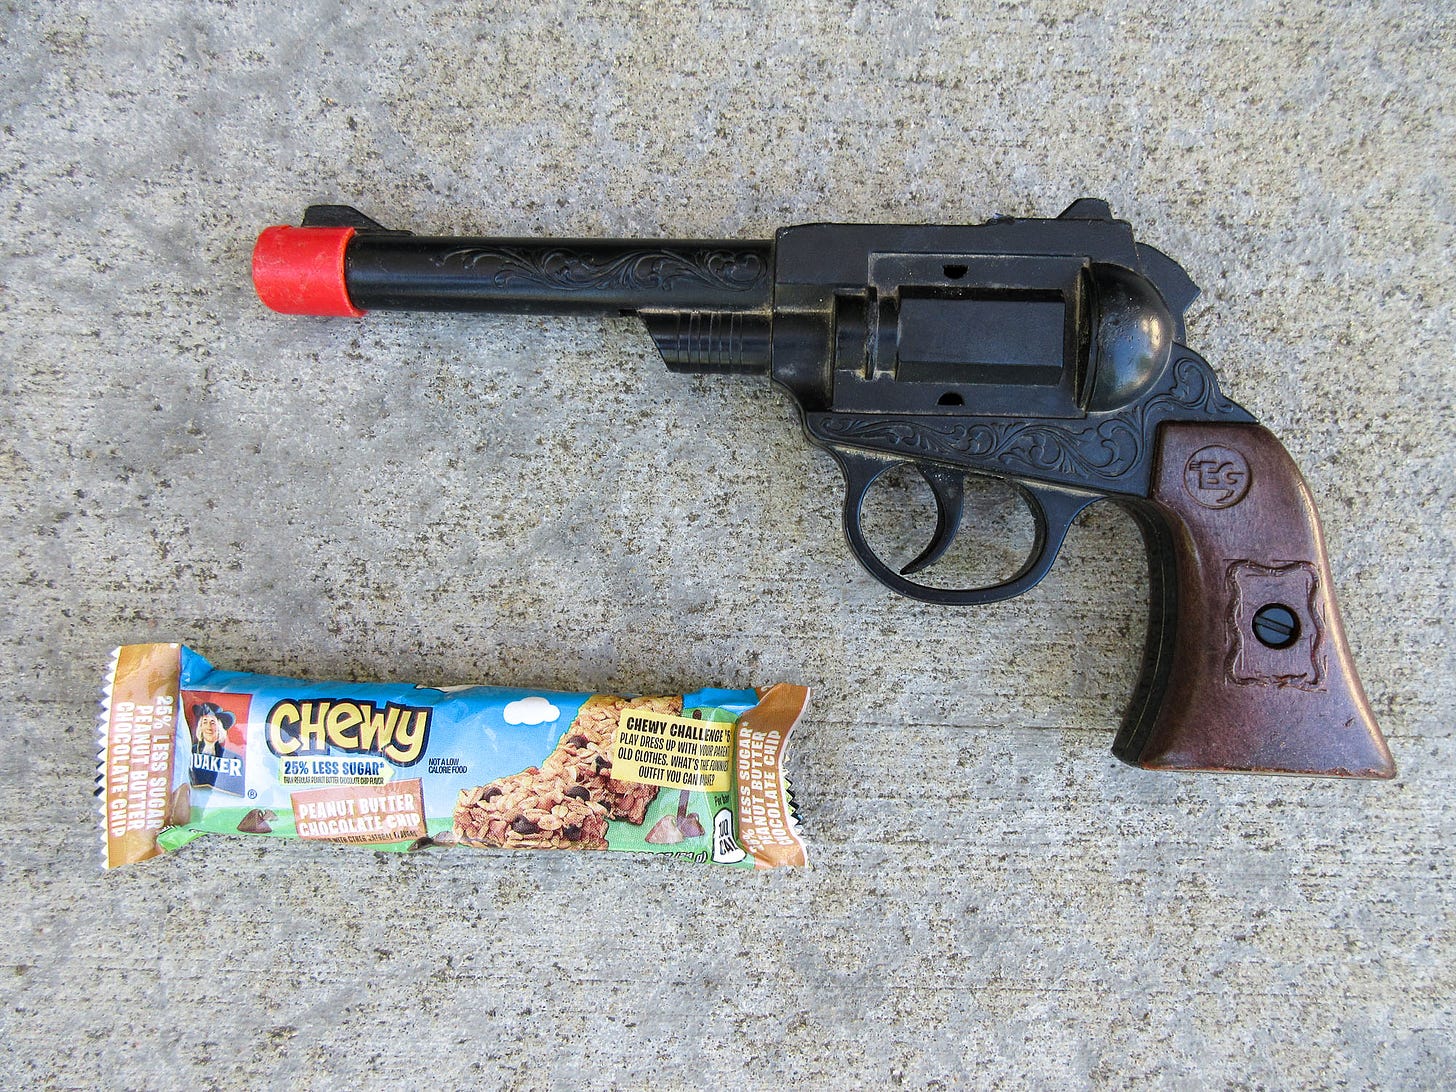 Toy gun, Chewy granola bar